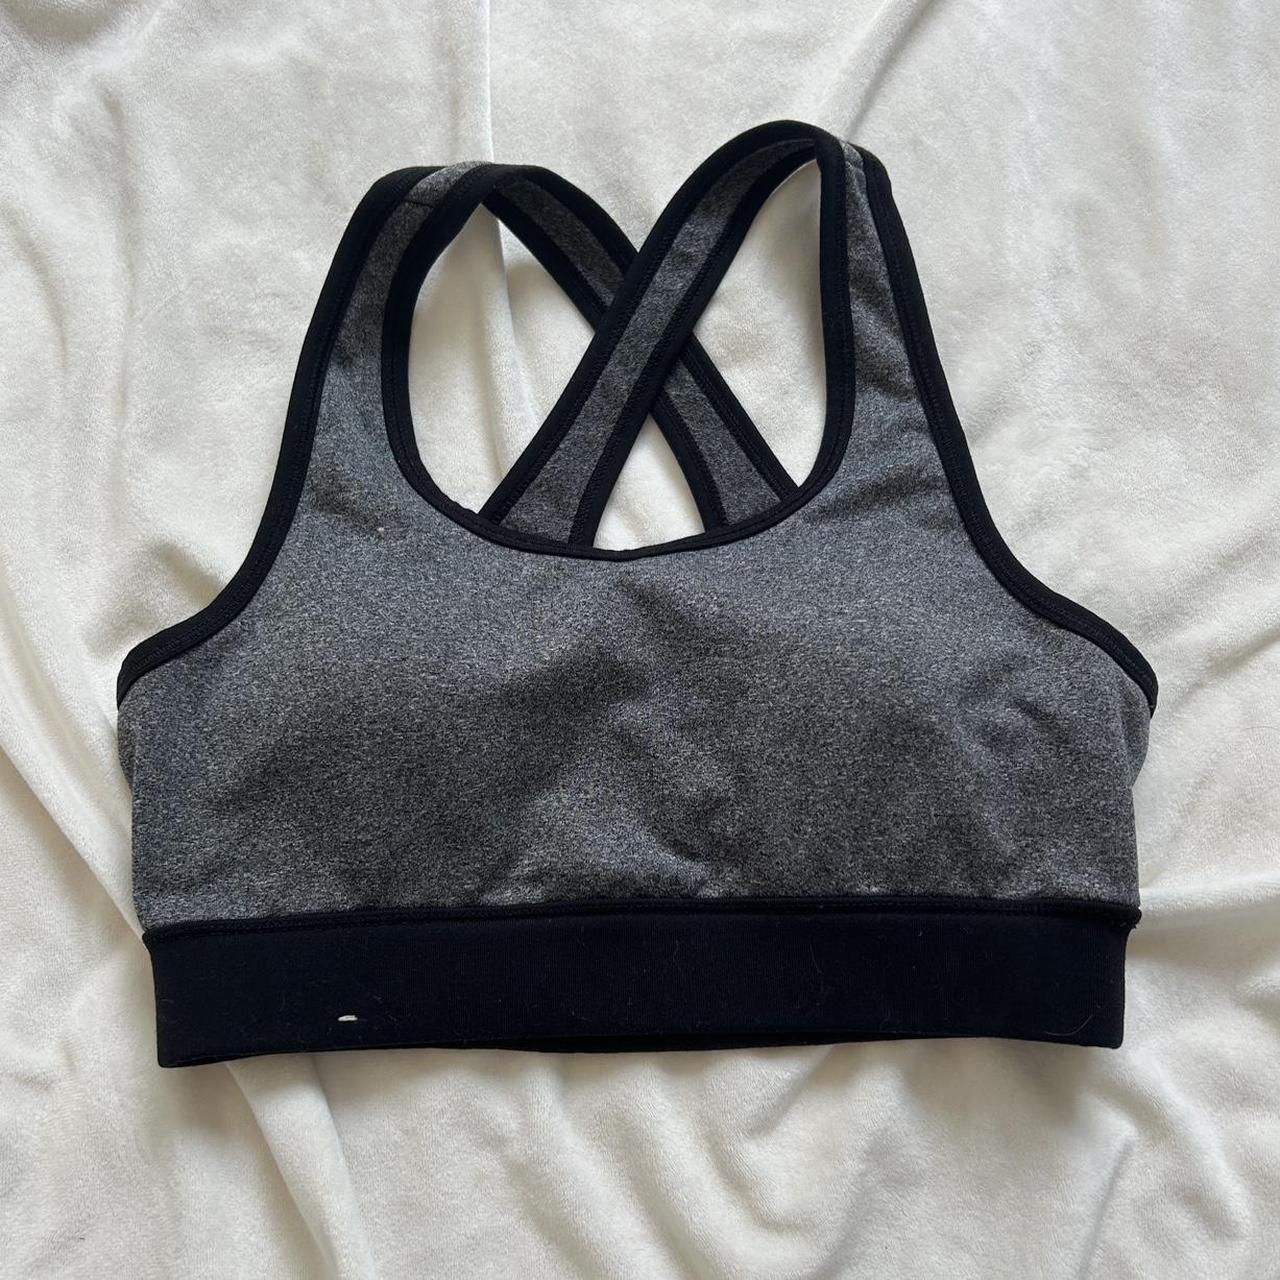 xs dark grey sports bra - Depop